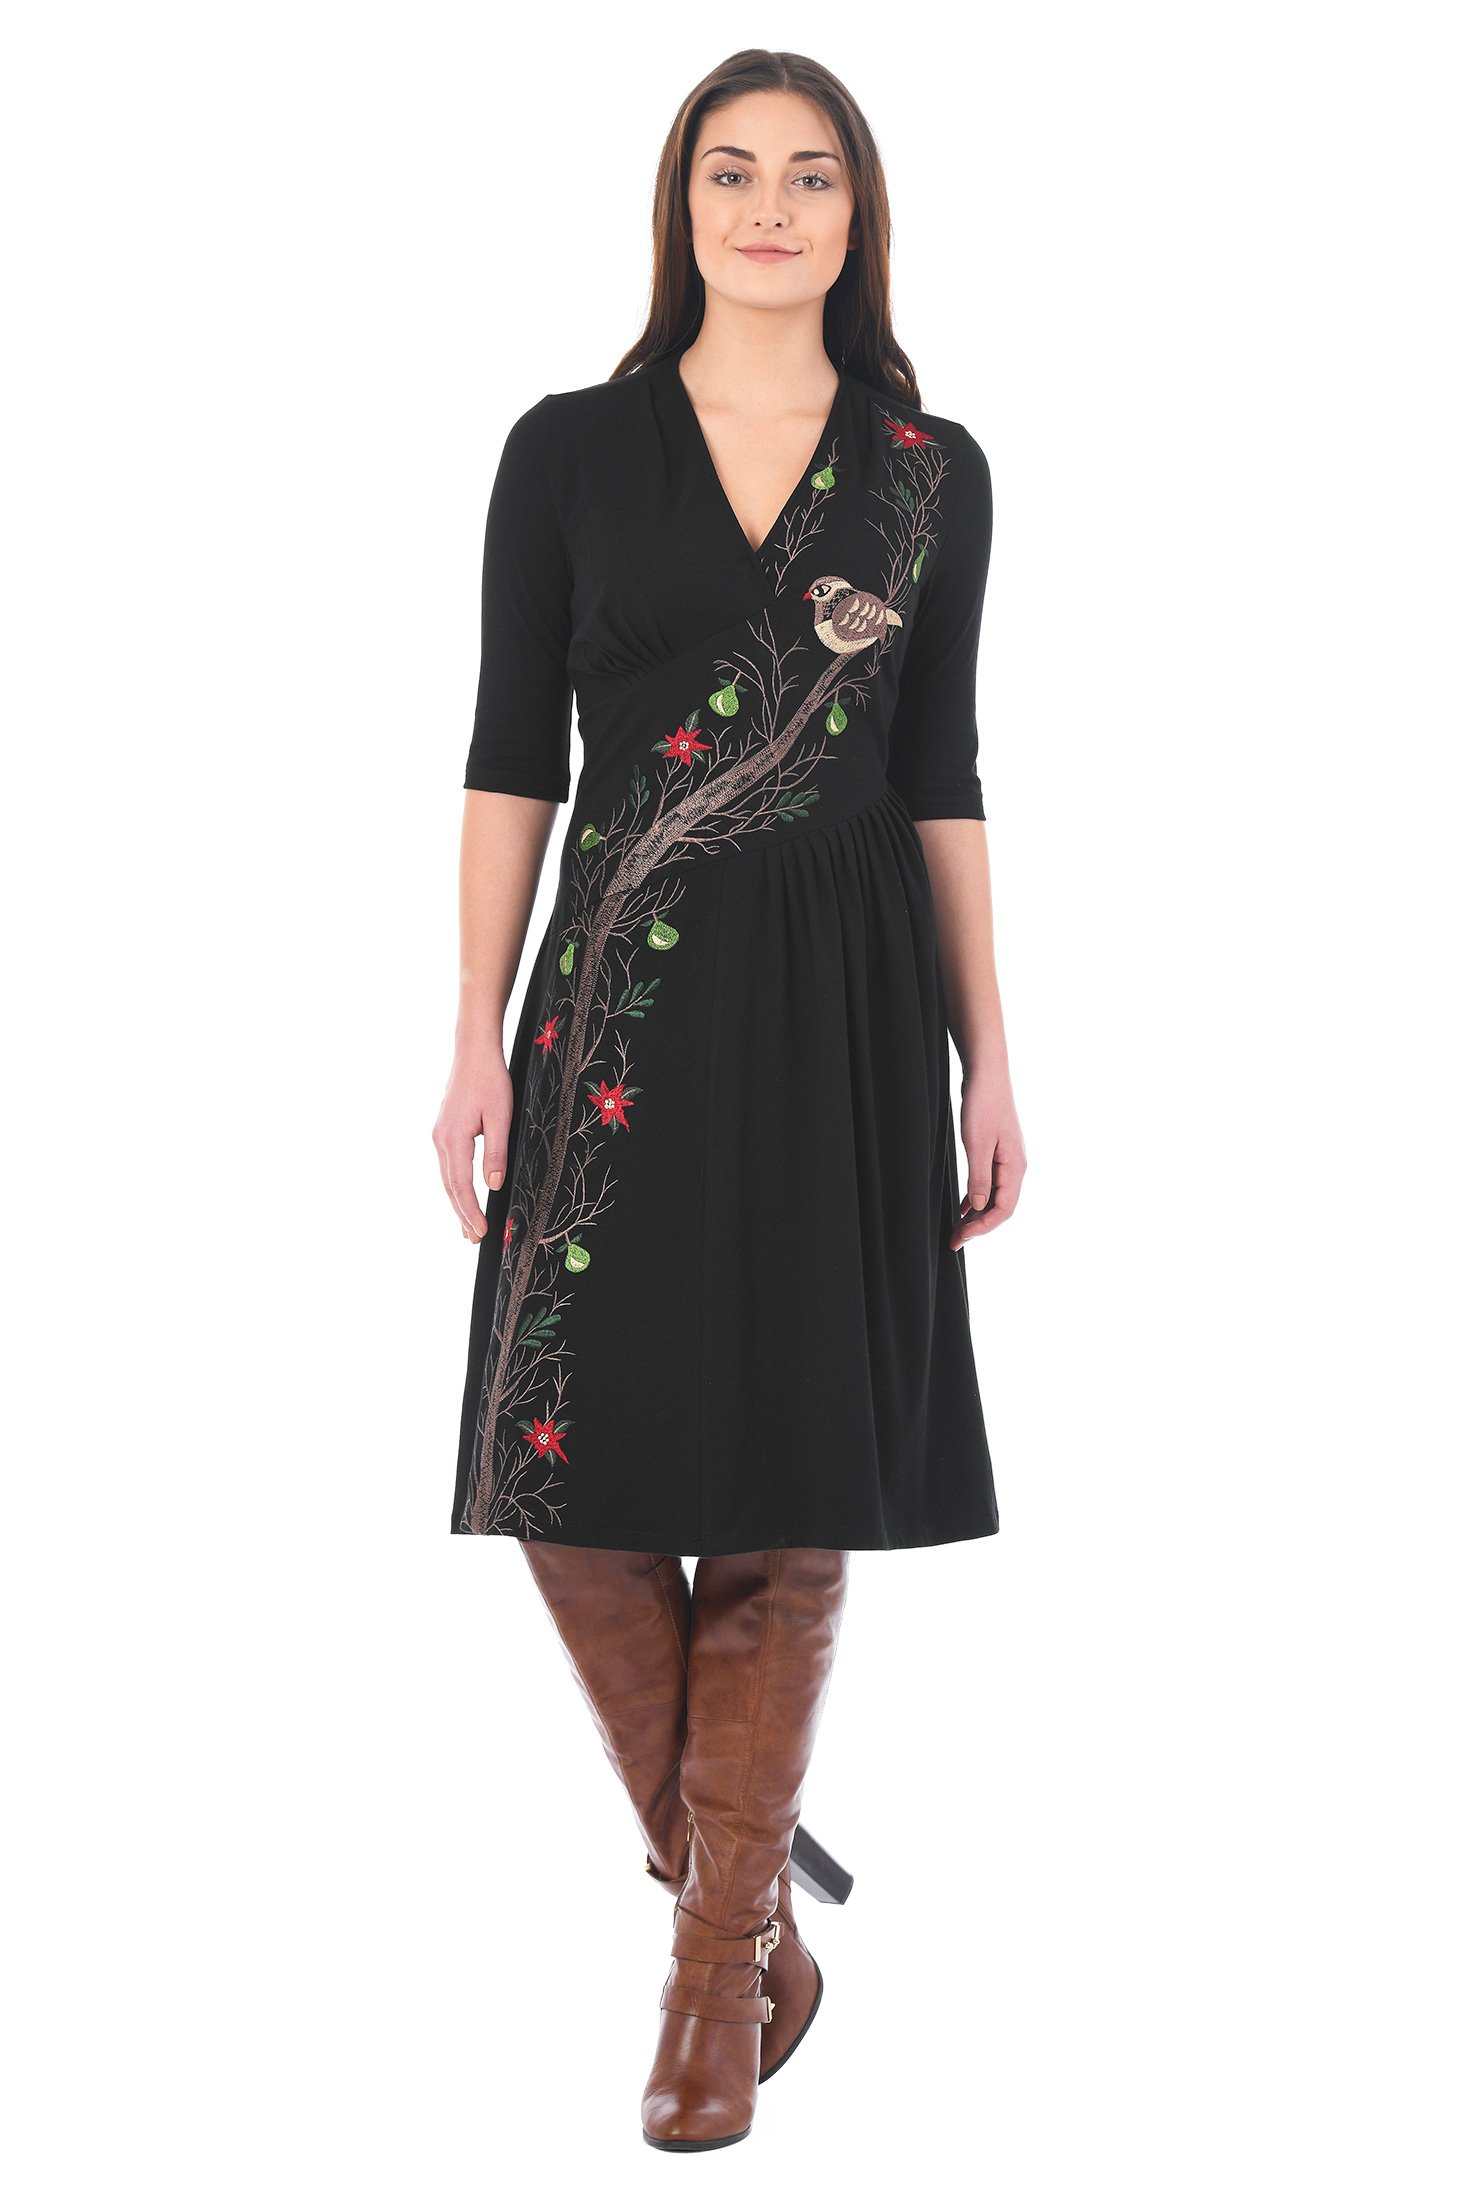 Shop Bird and X-mas branch embellished cotton knit dress | eShakti